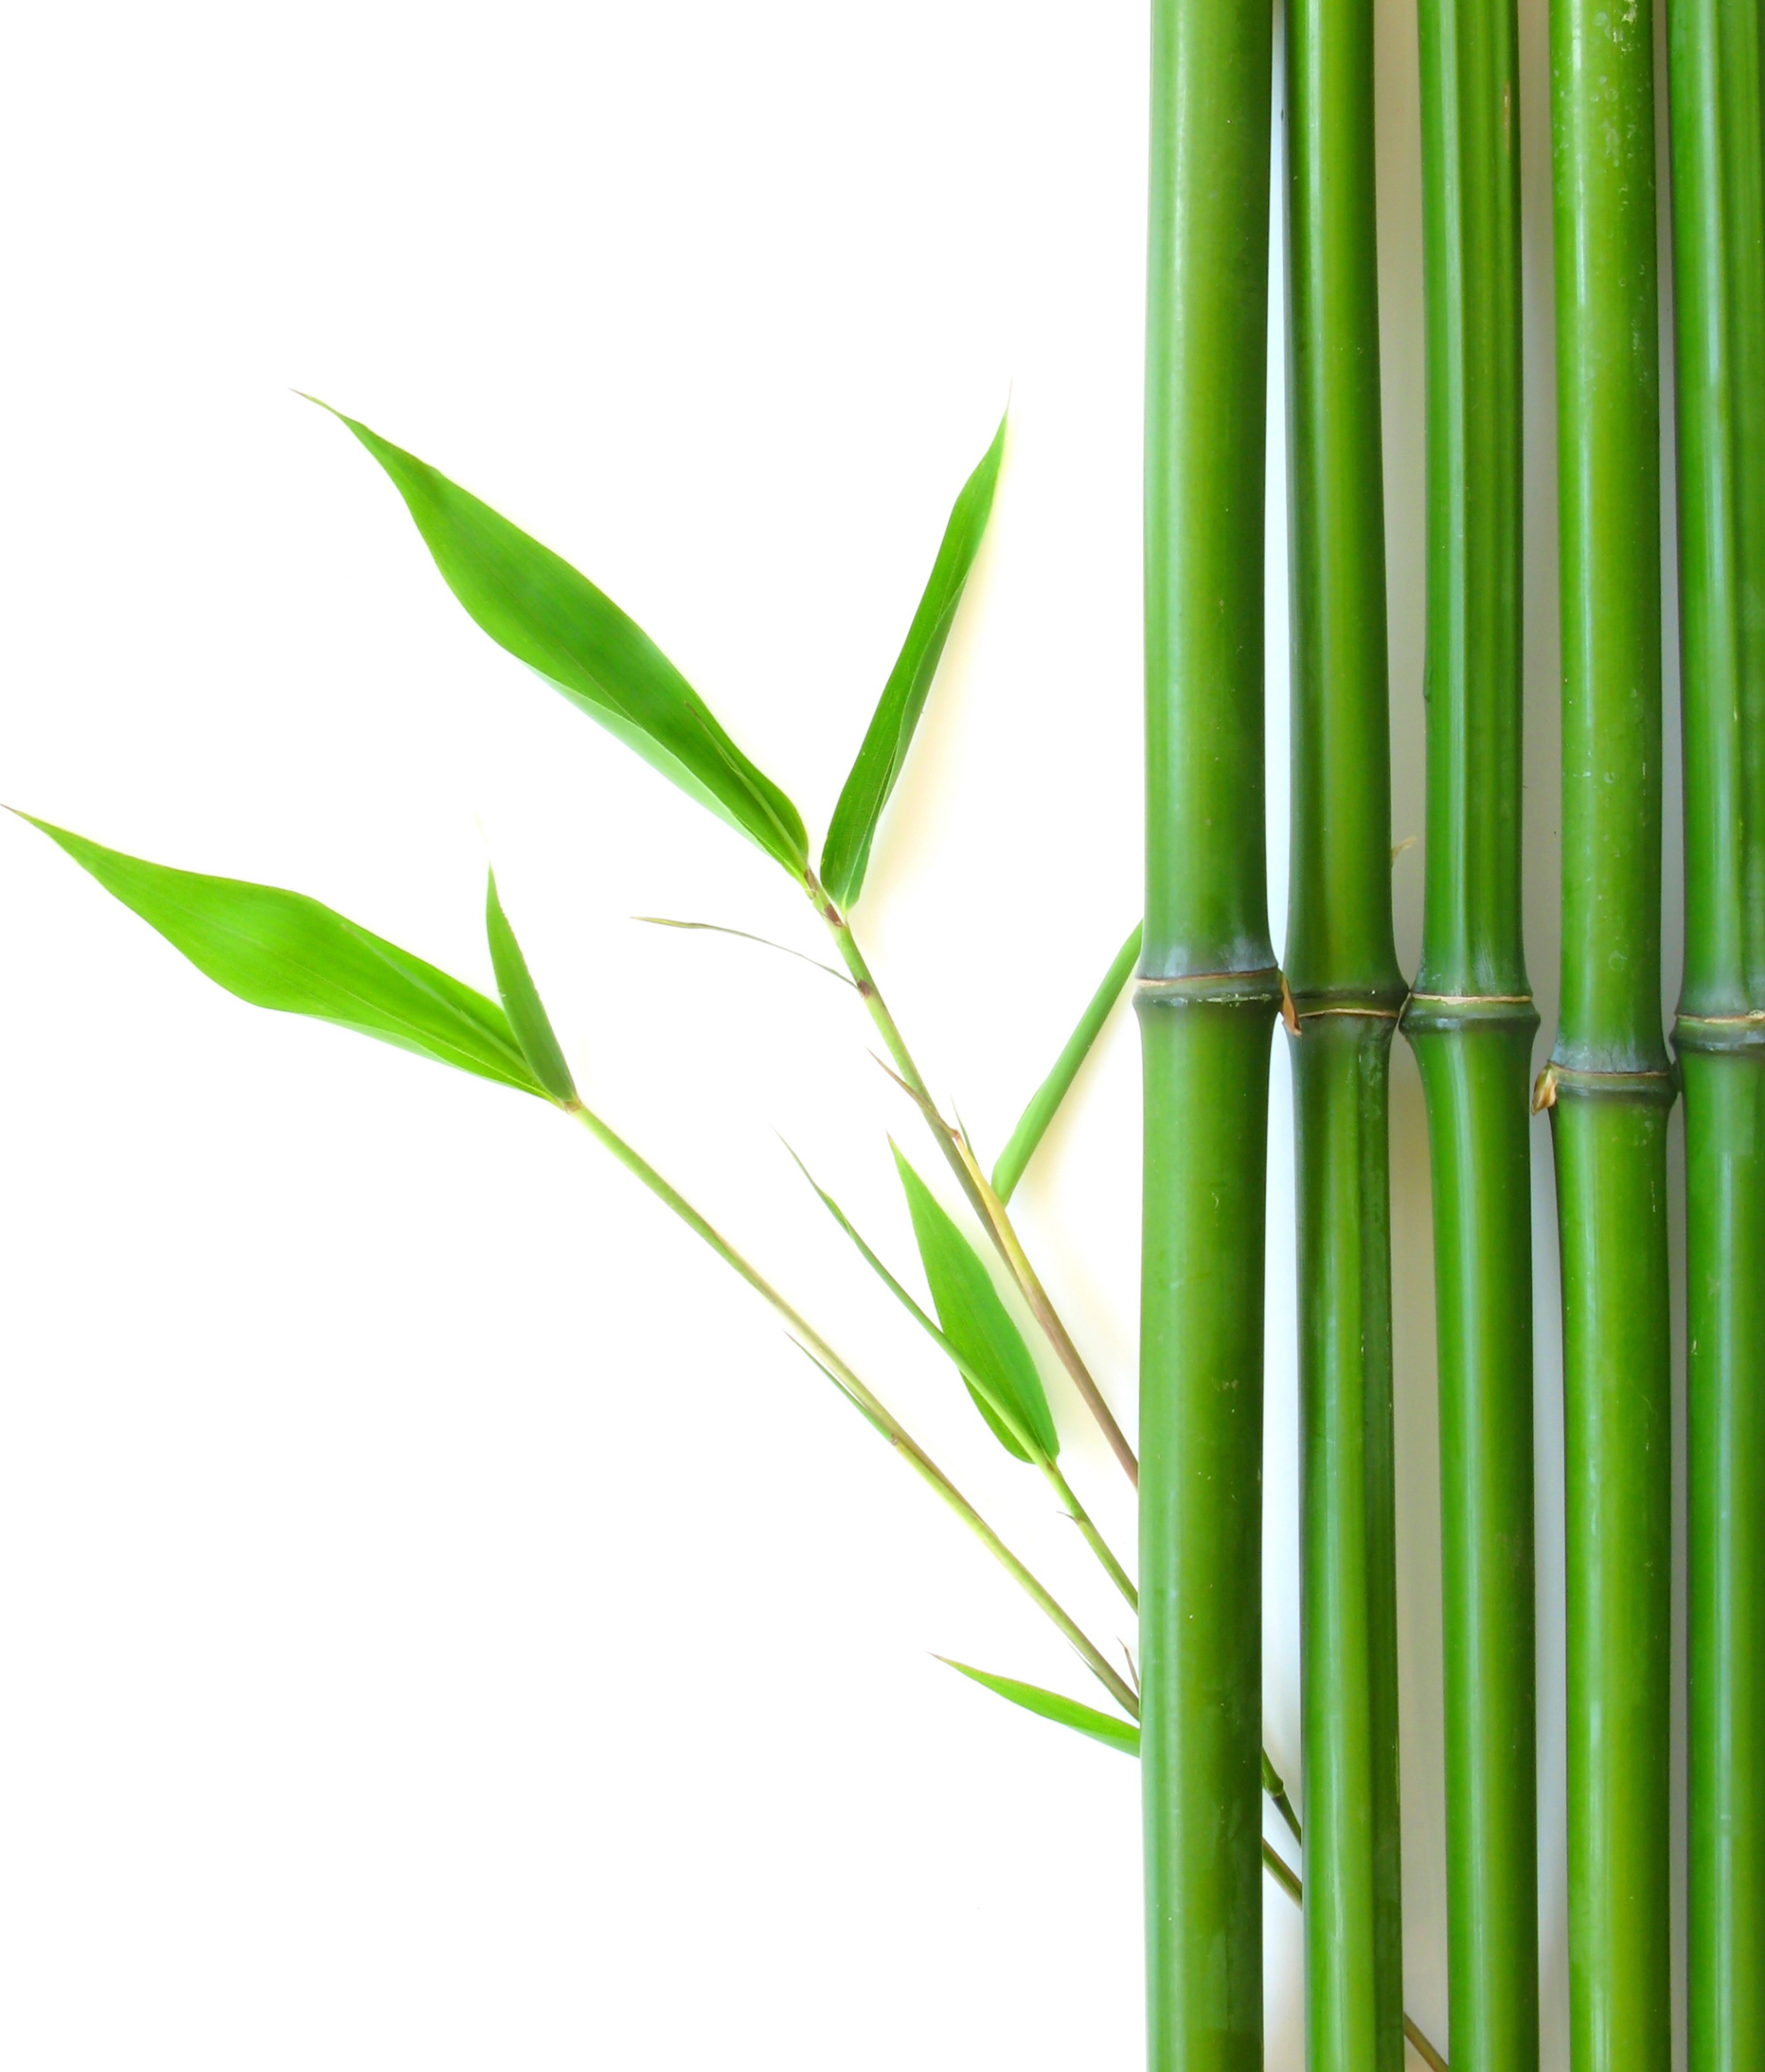 Speeding Bamboo